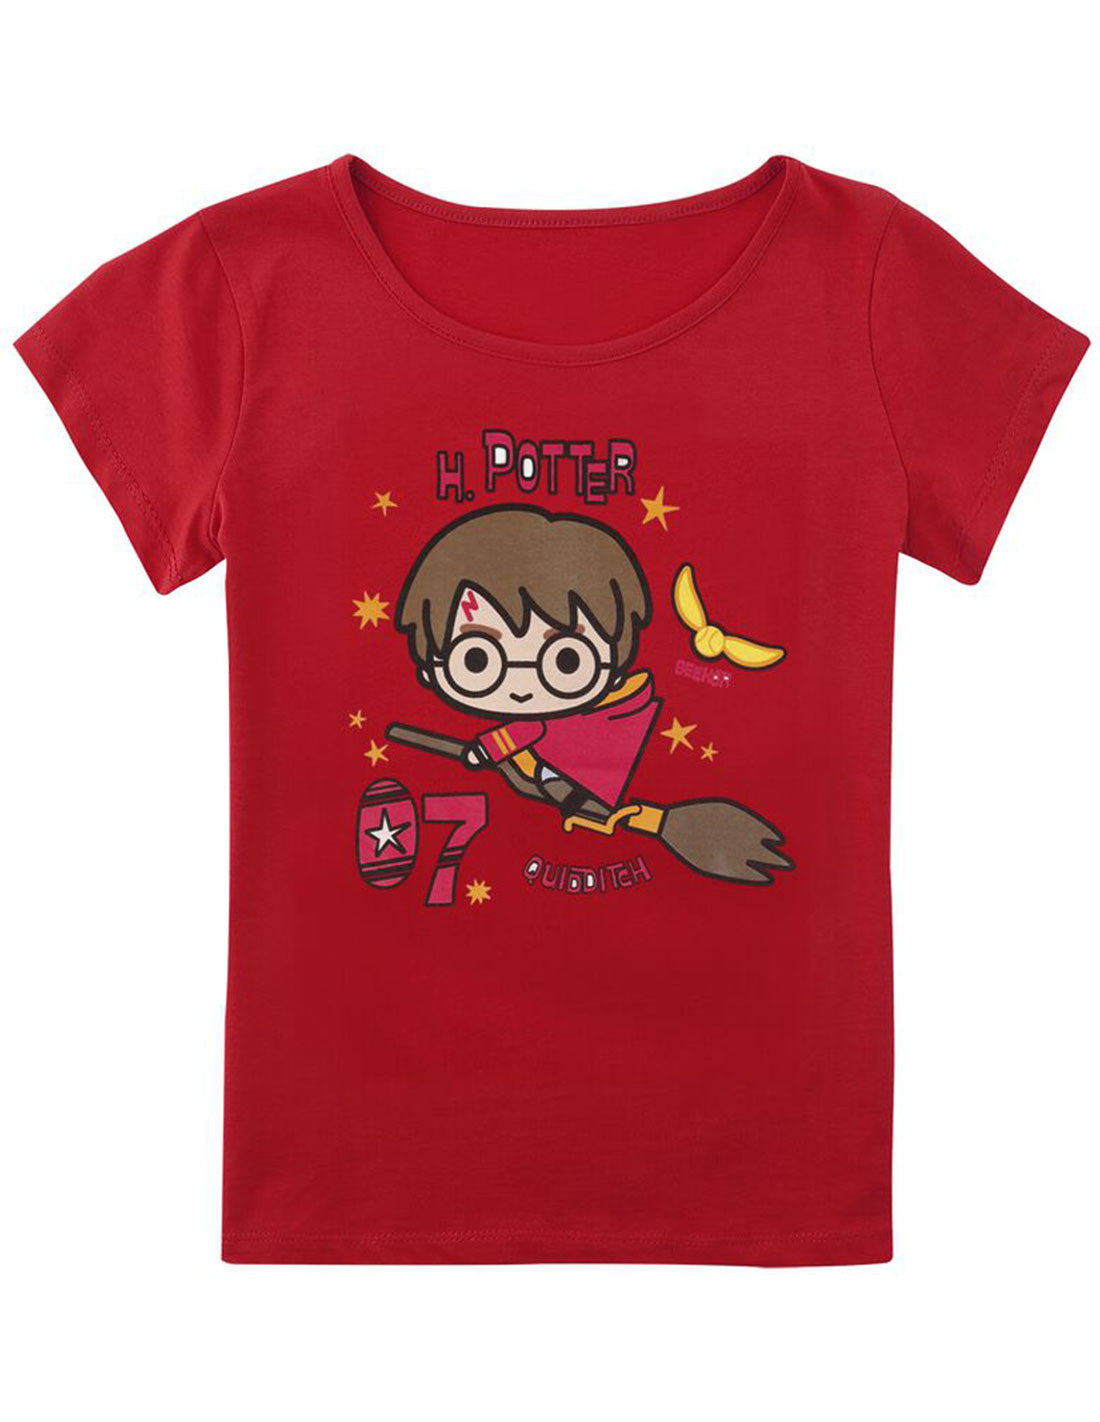 Harry Potter - T-shirt - Fille 